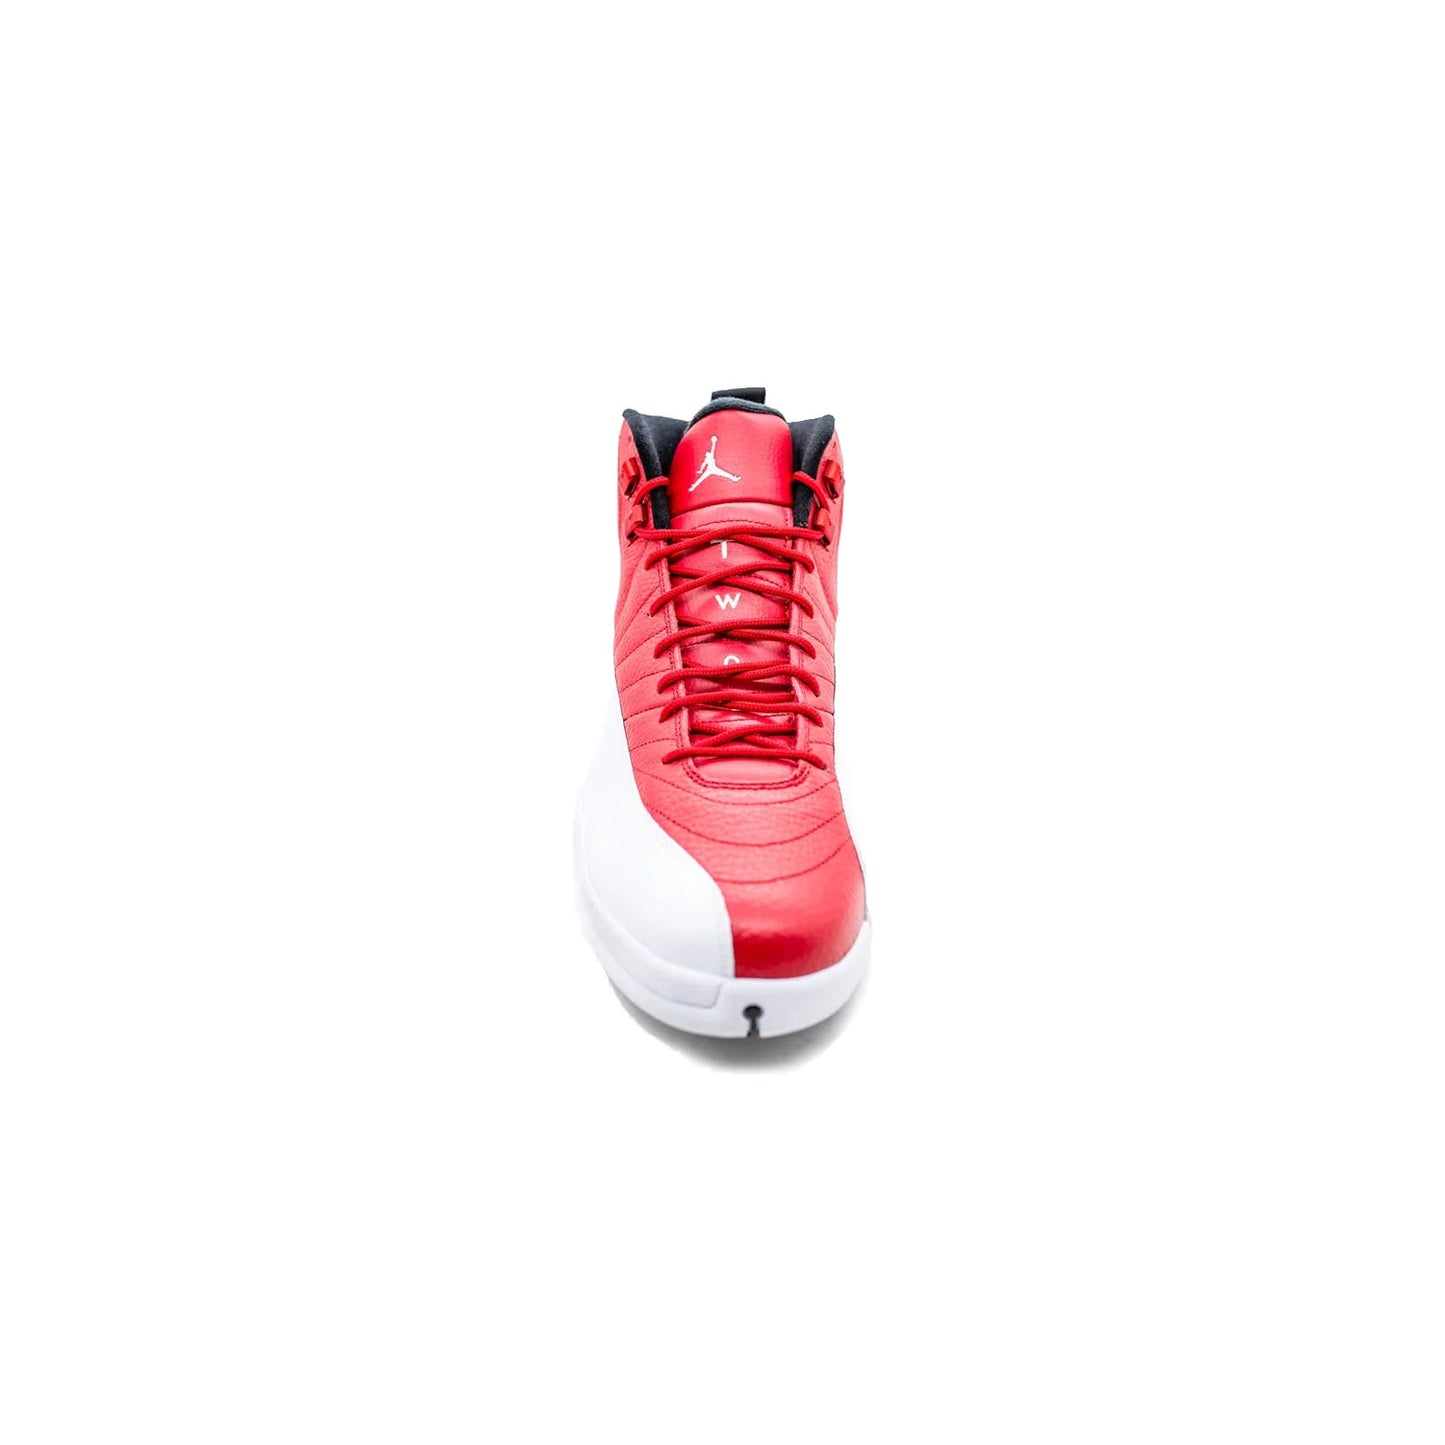 Air Jordan 12, Gym Red (2018)